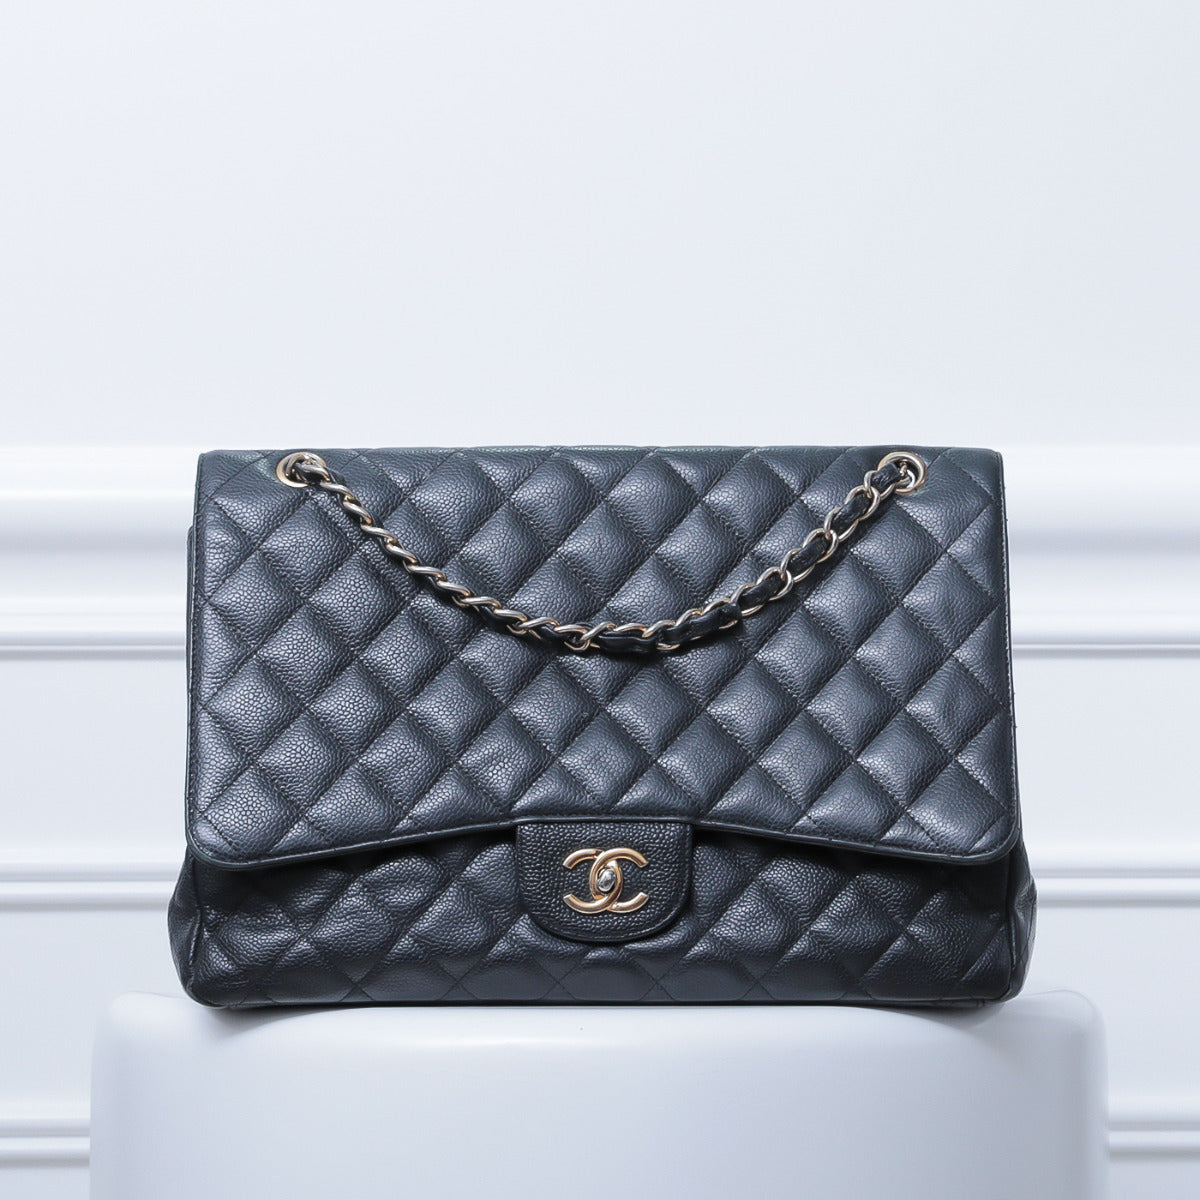 Chanel Black Classic Single Flap Bag